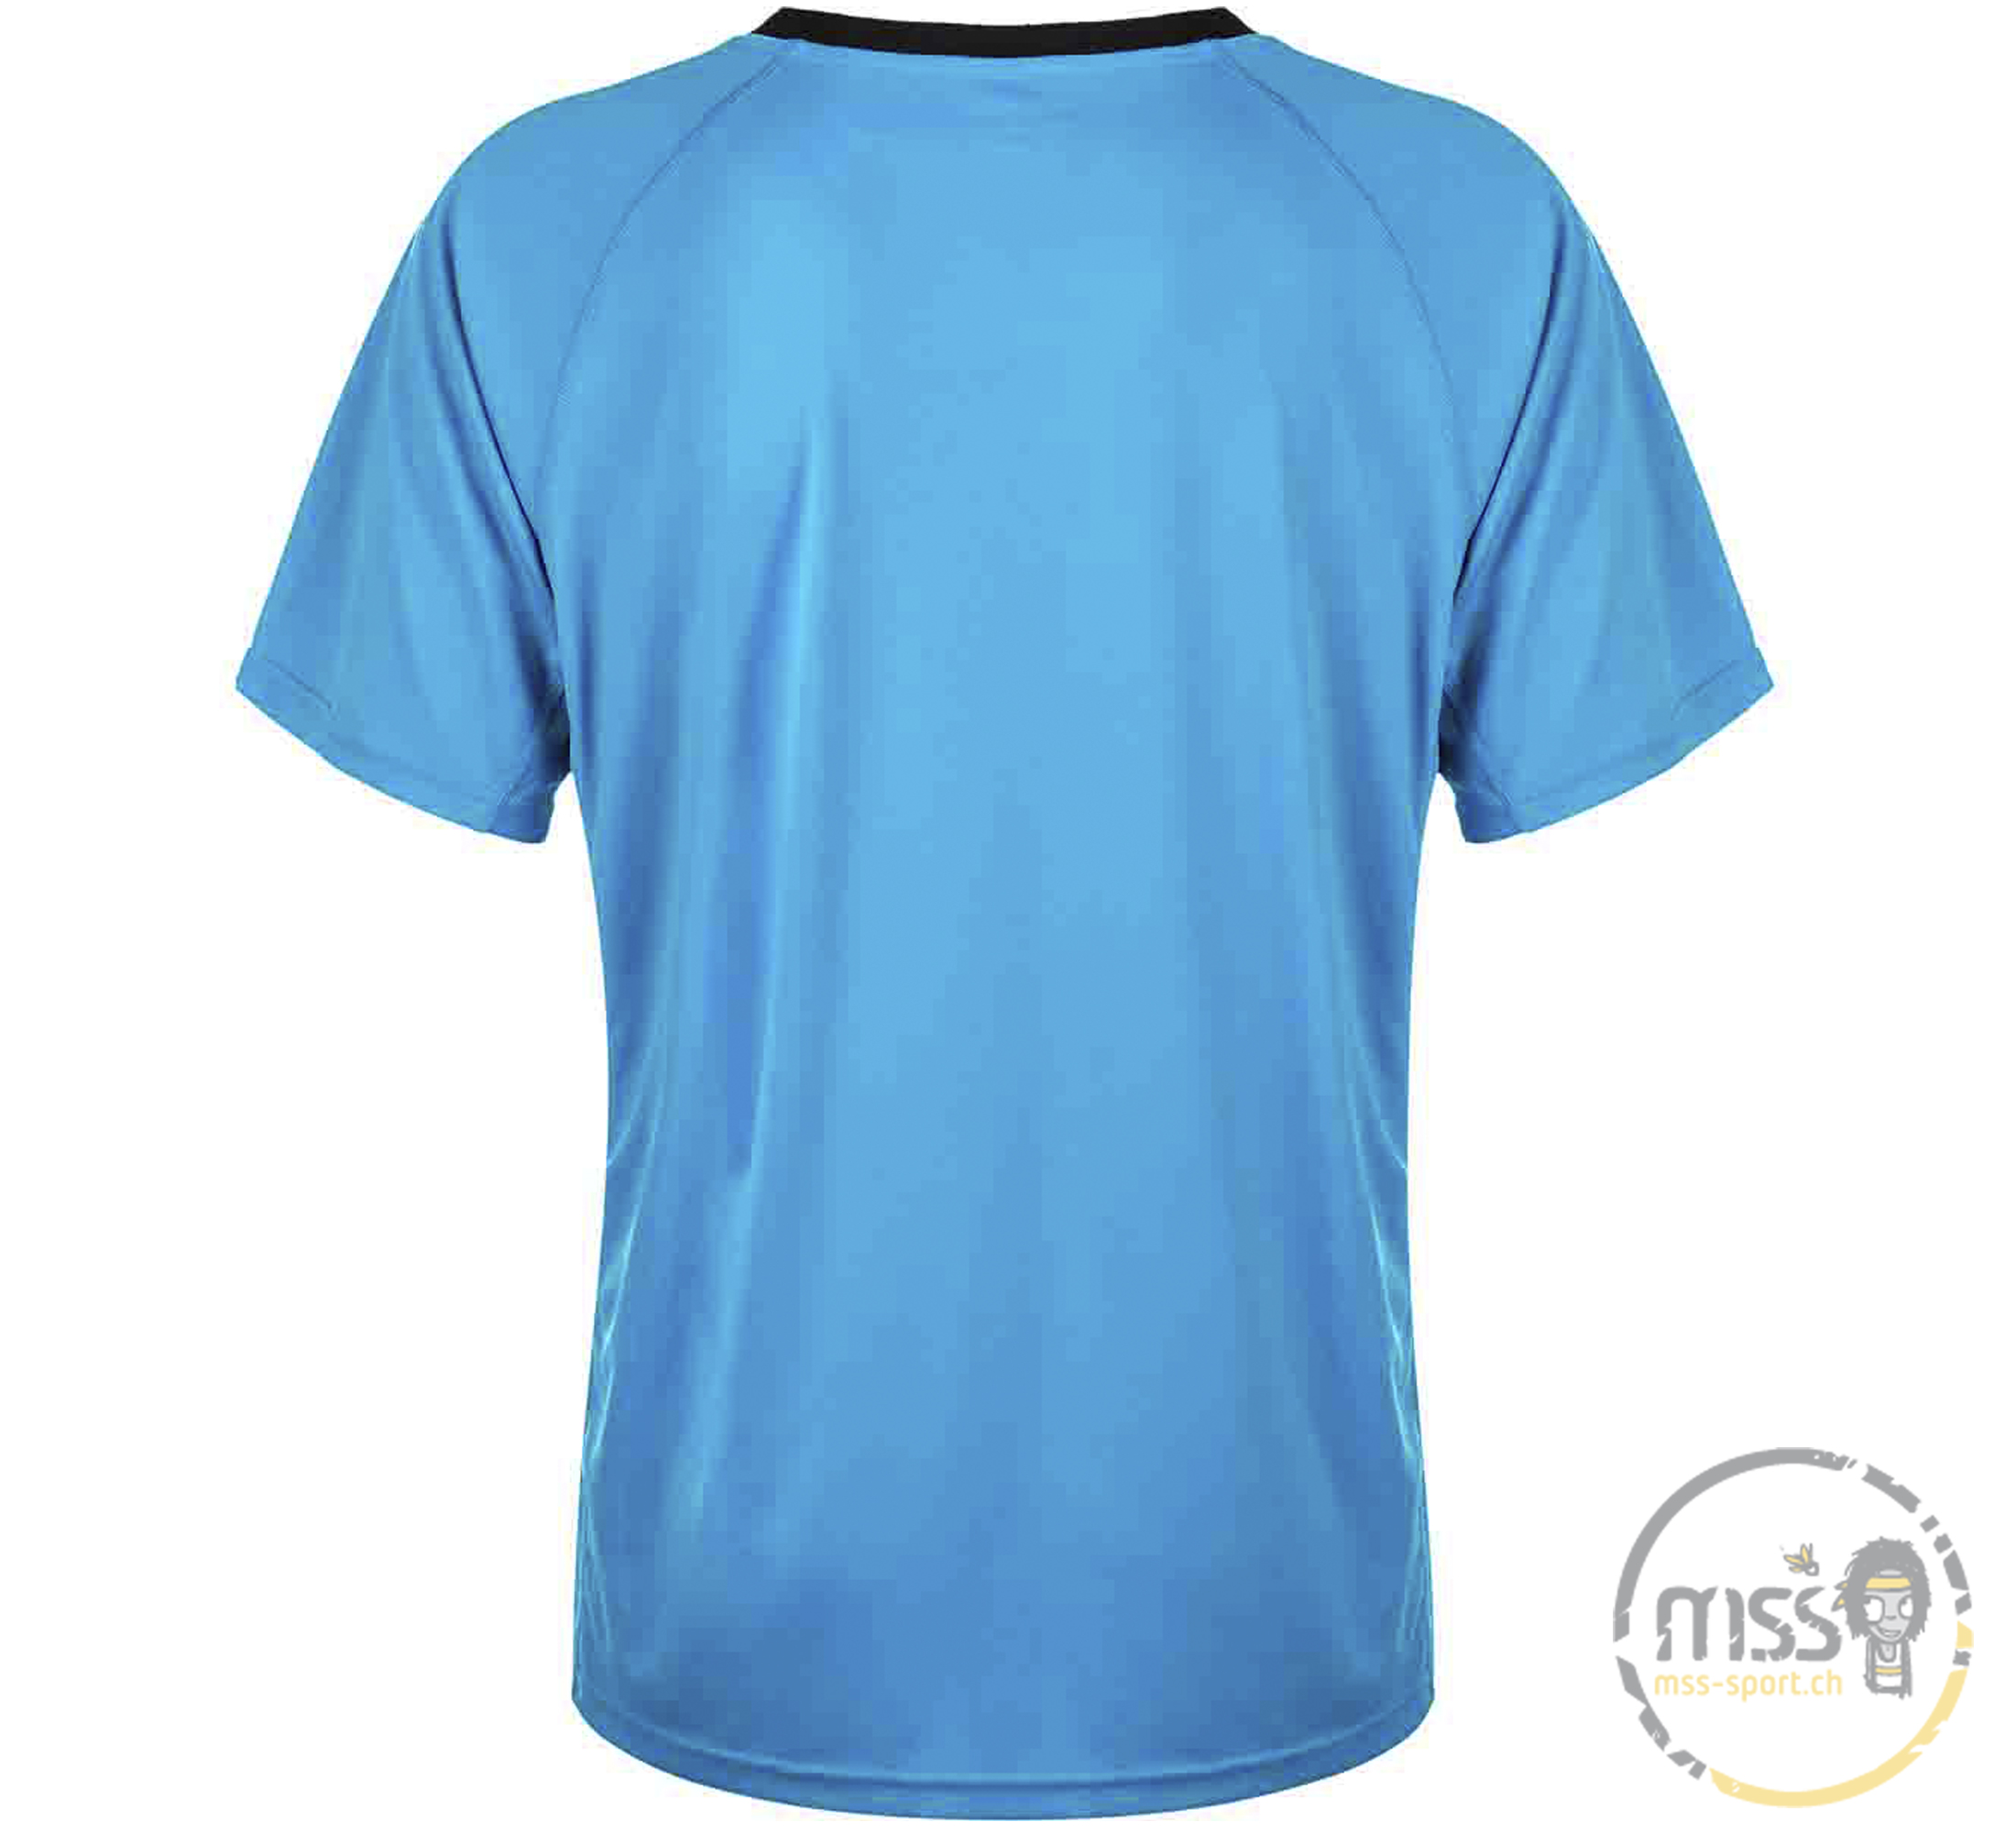 Forza Shirt Bling Tee atomic blue